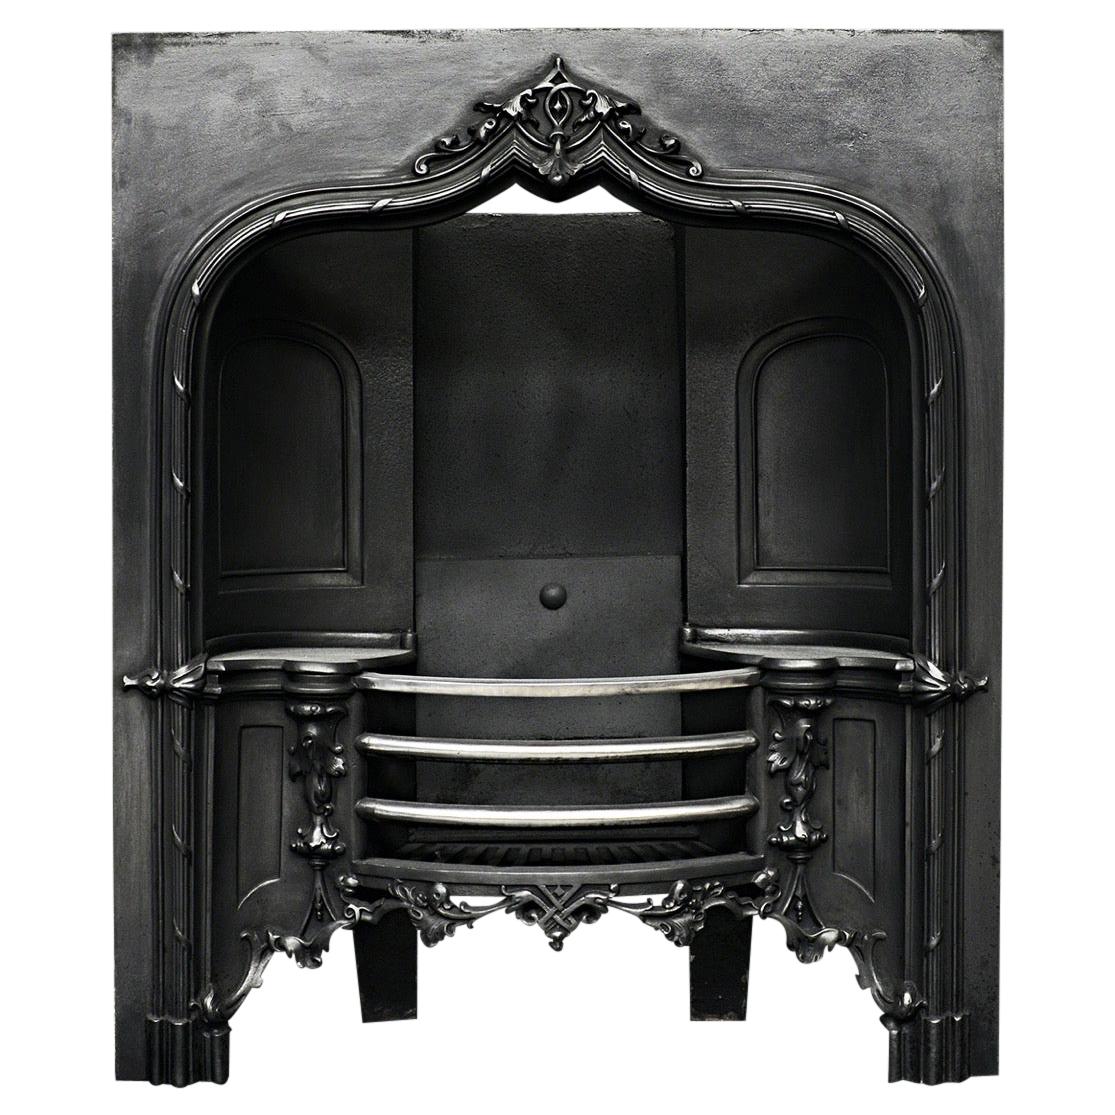 Decorative Cast Iron Victorian Fireplace Insert